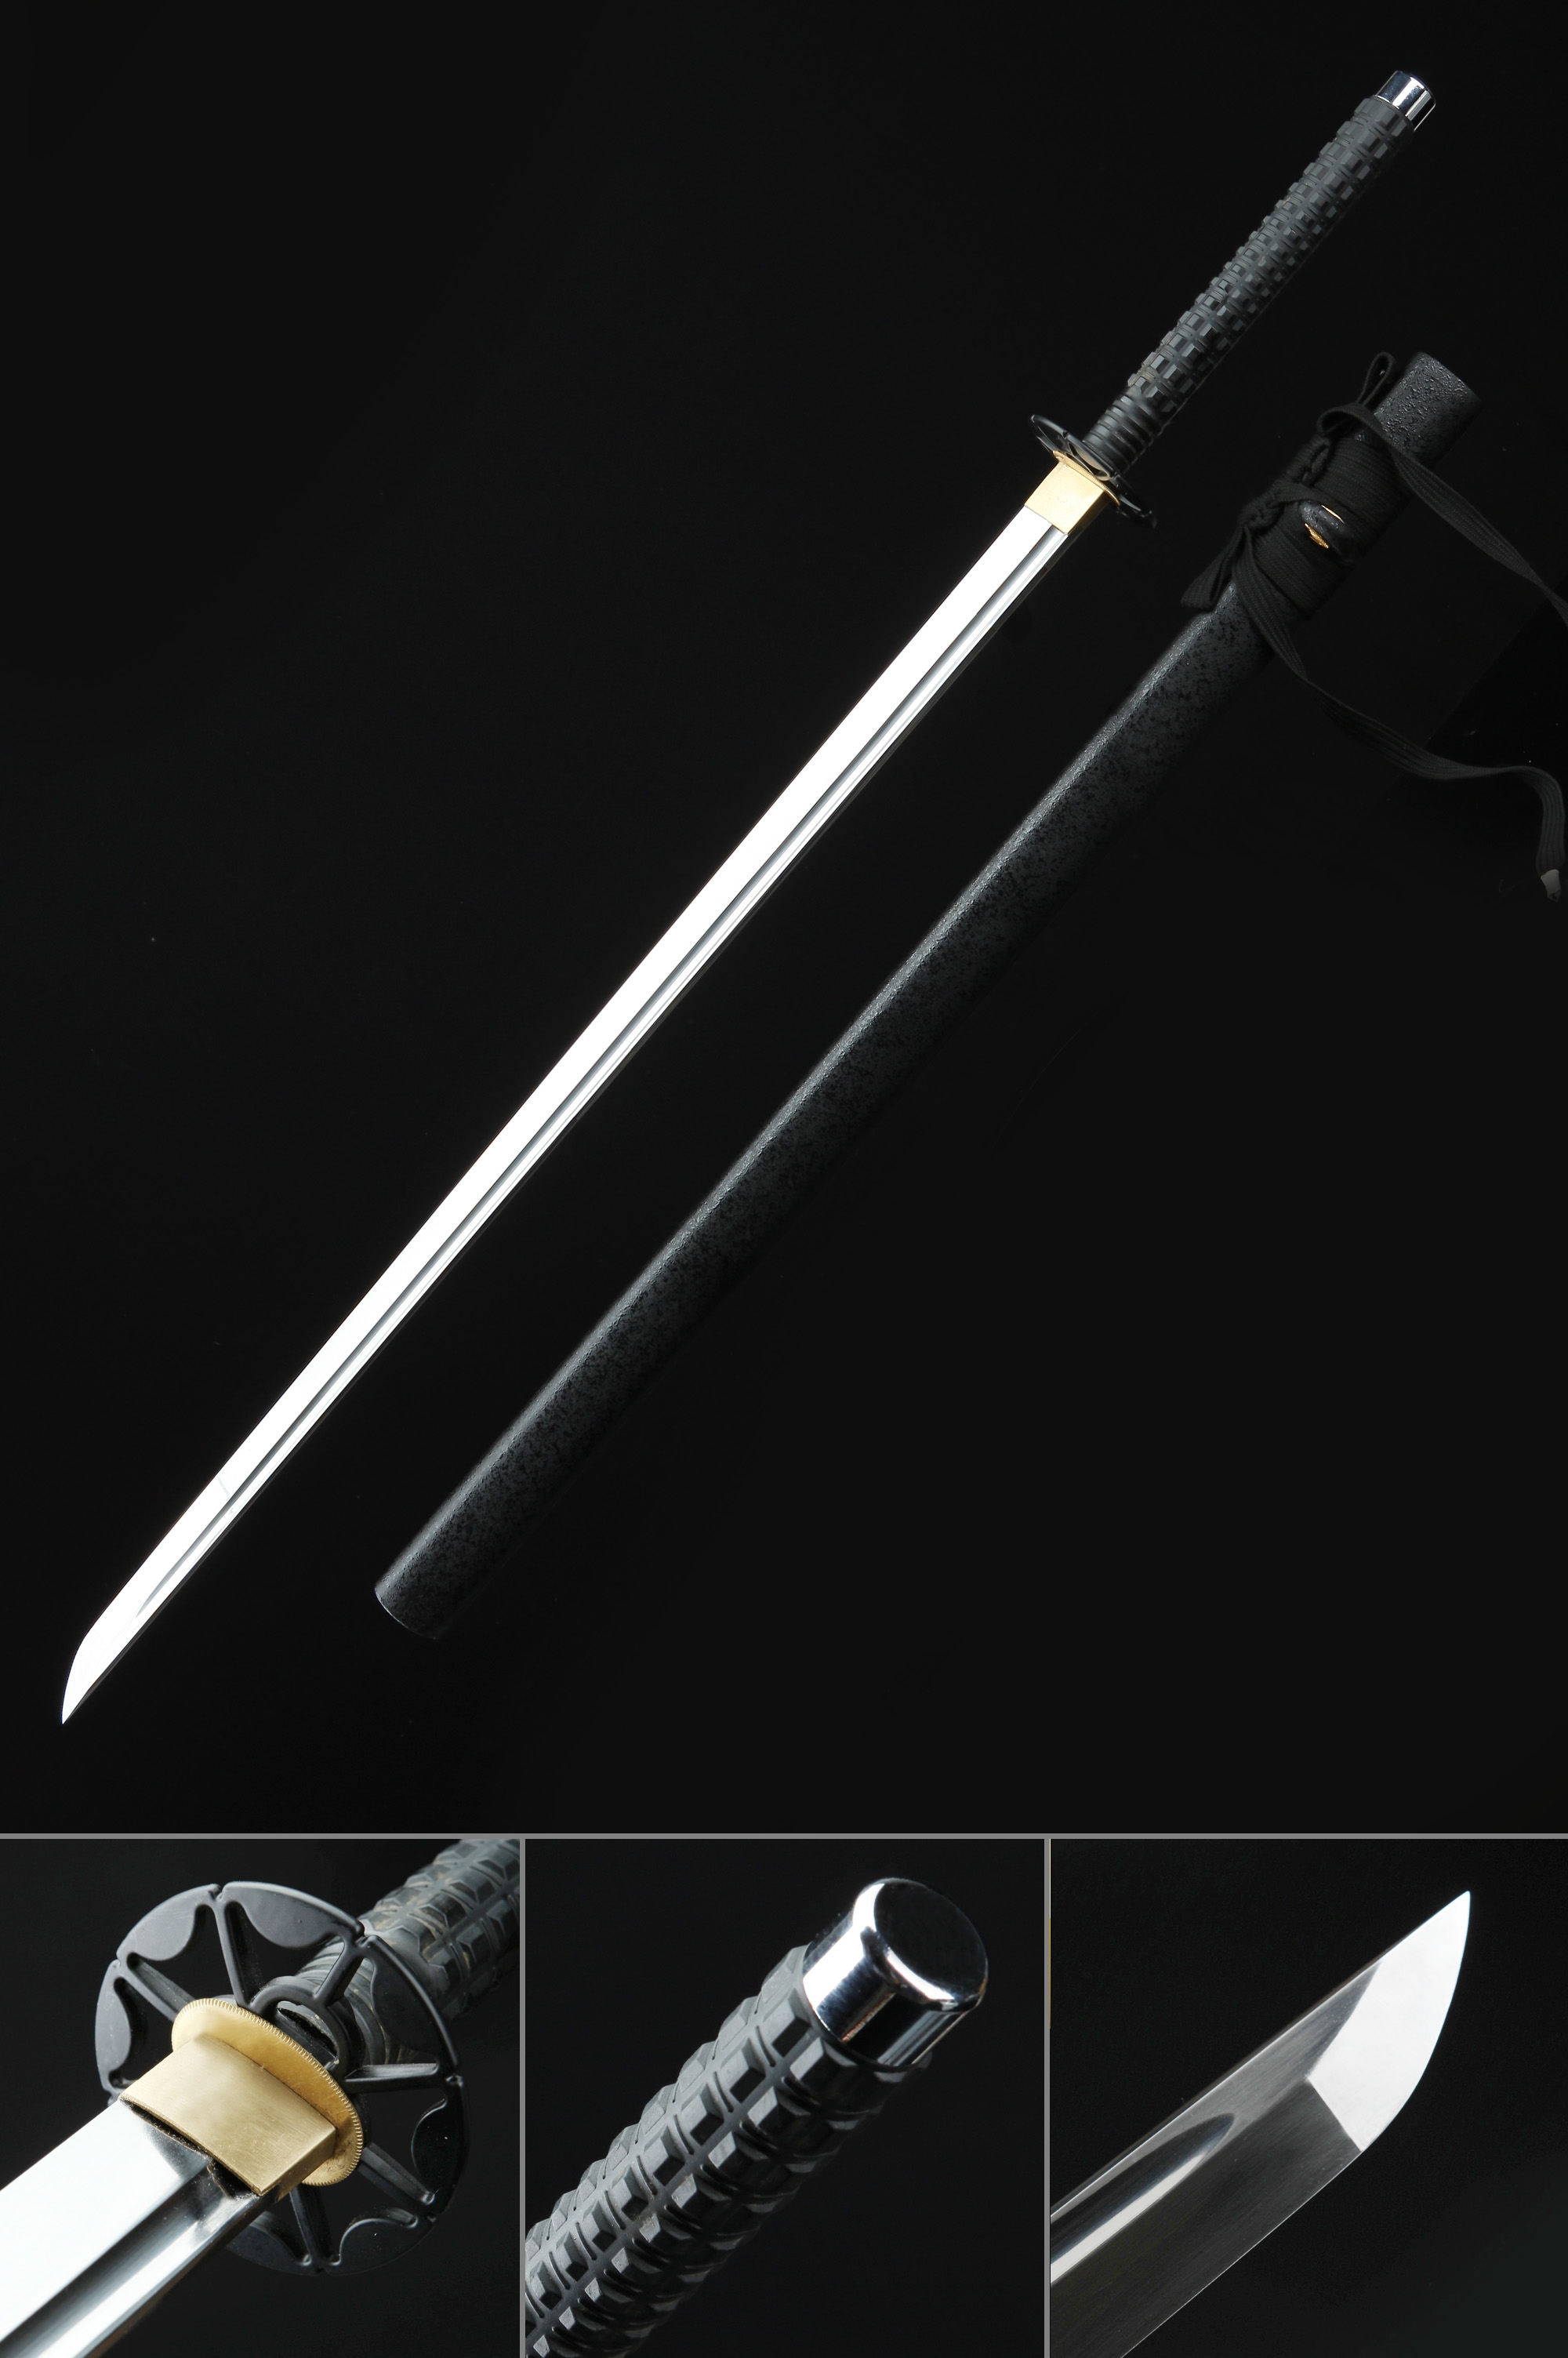 Black Ninja Sword for Sale - TrueKatana